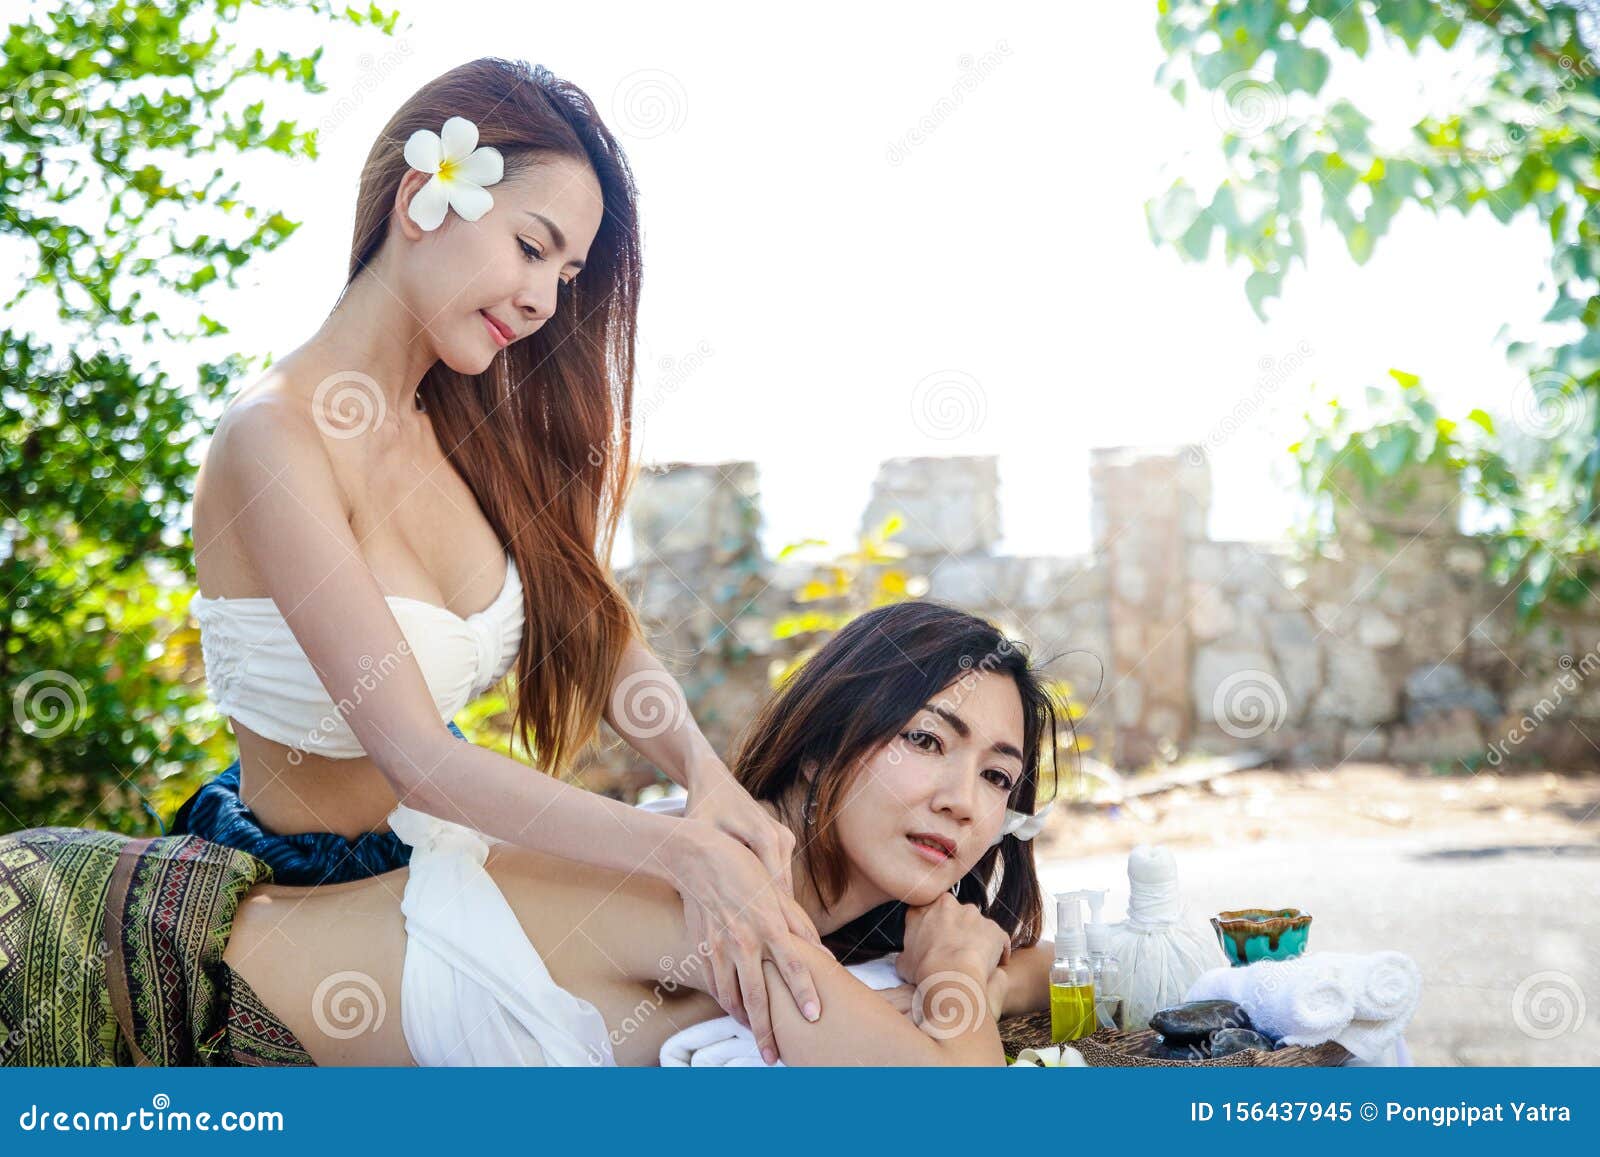 real asian massage girl girl porn photo